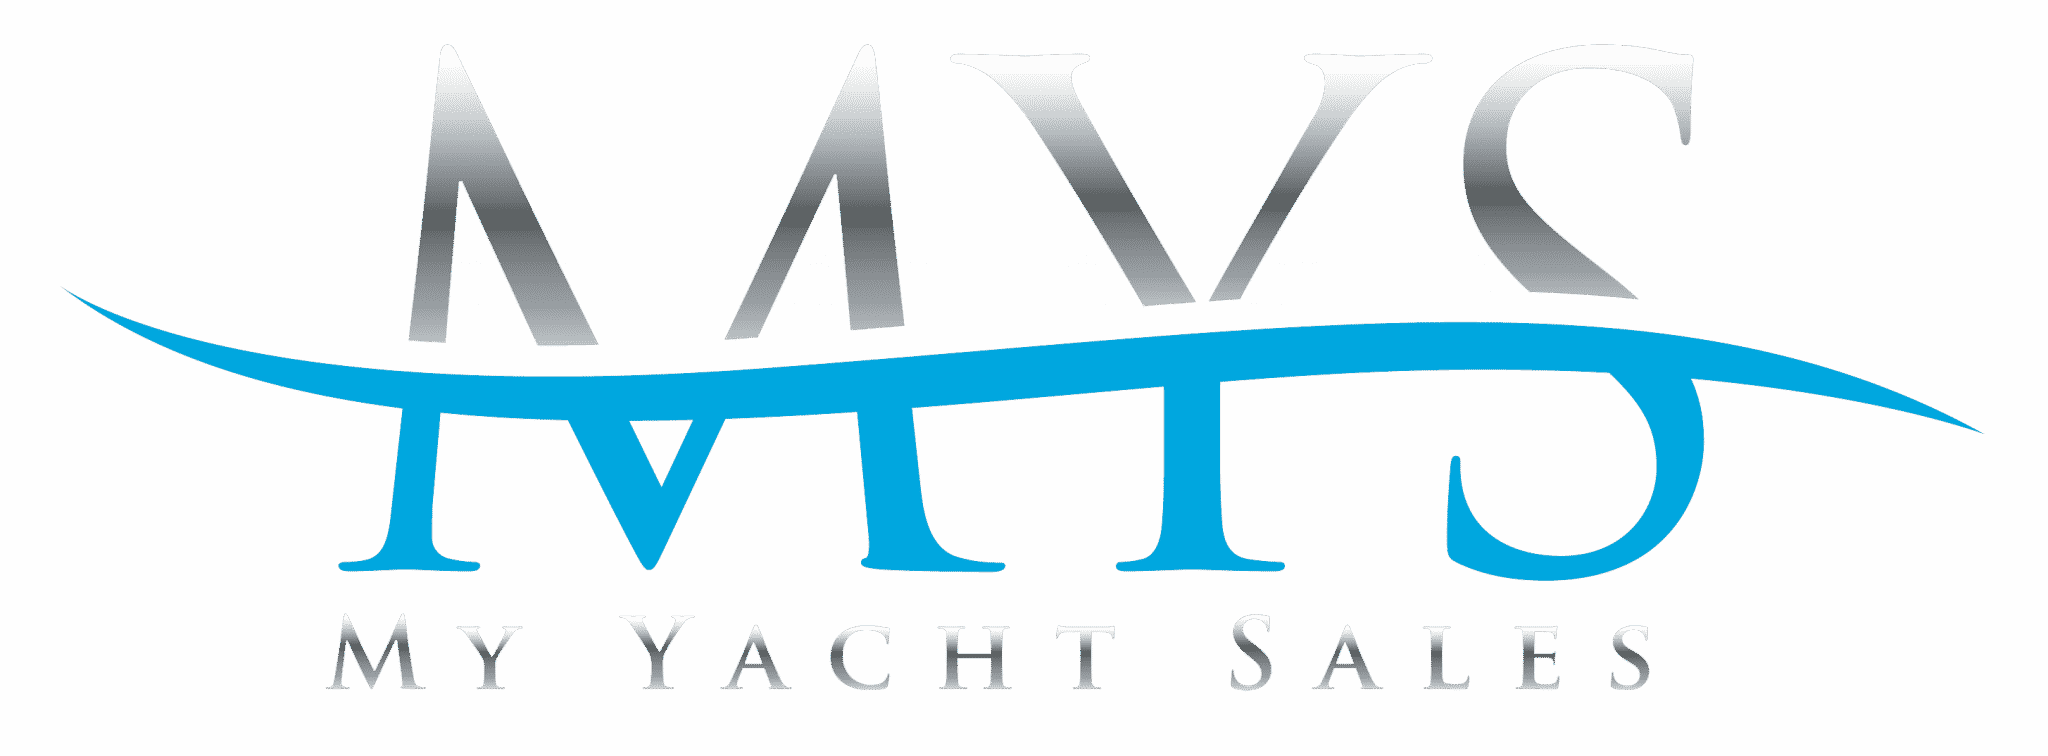 SCOUT 275 DORADO 27ft Scout Yacht For Sale